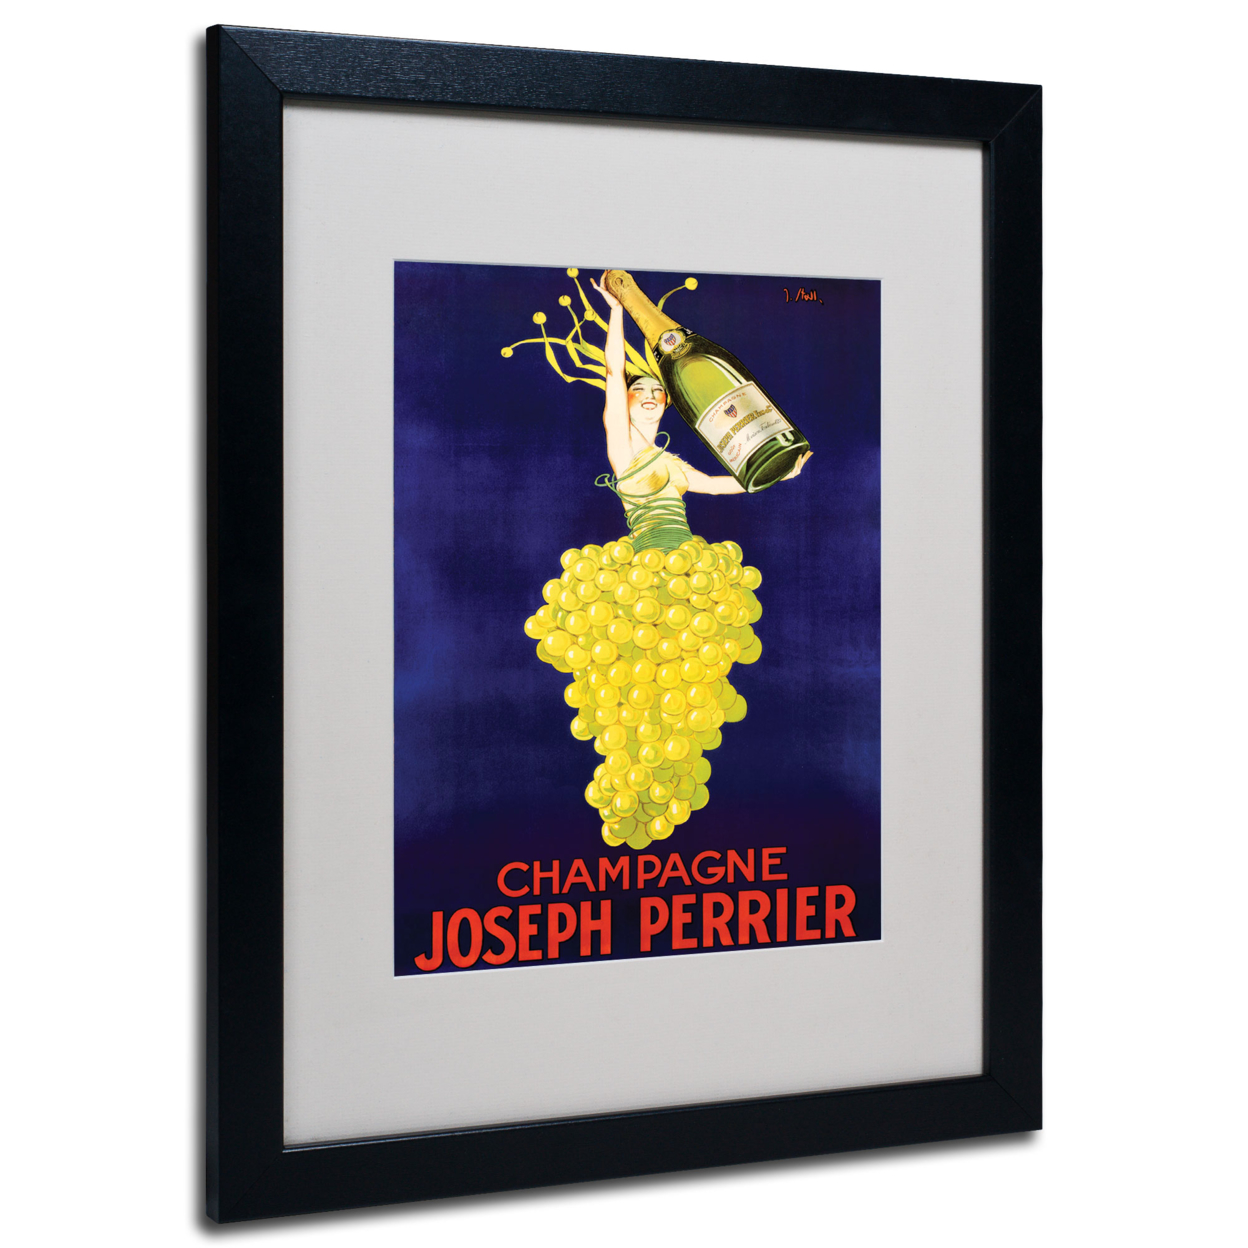 Champagne Joseph Perrier' Black Wooden Framed Art 18 X 22 Inches